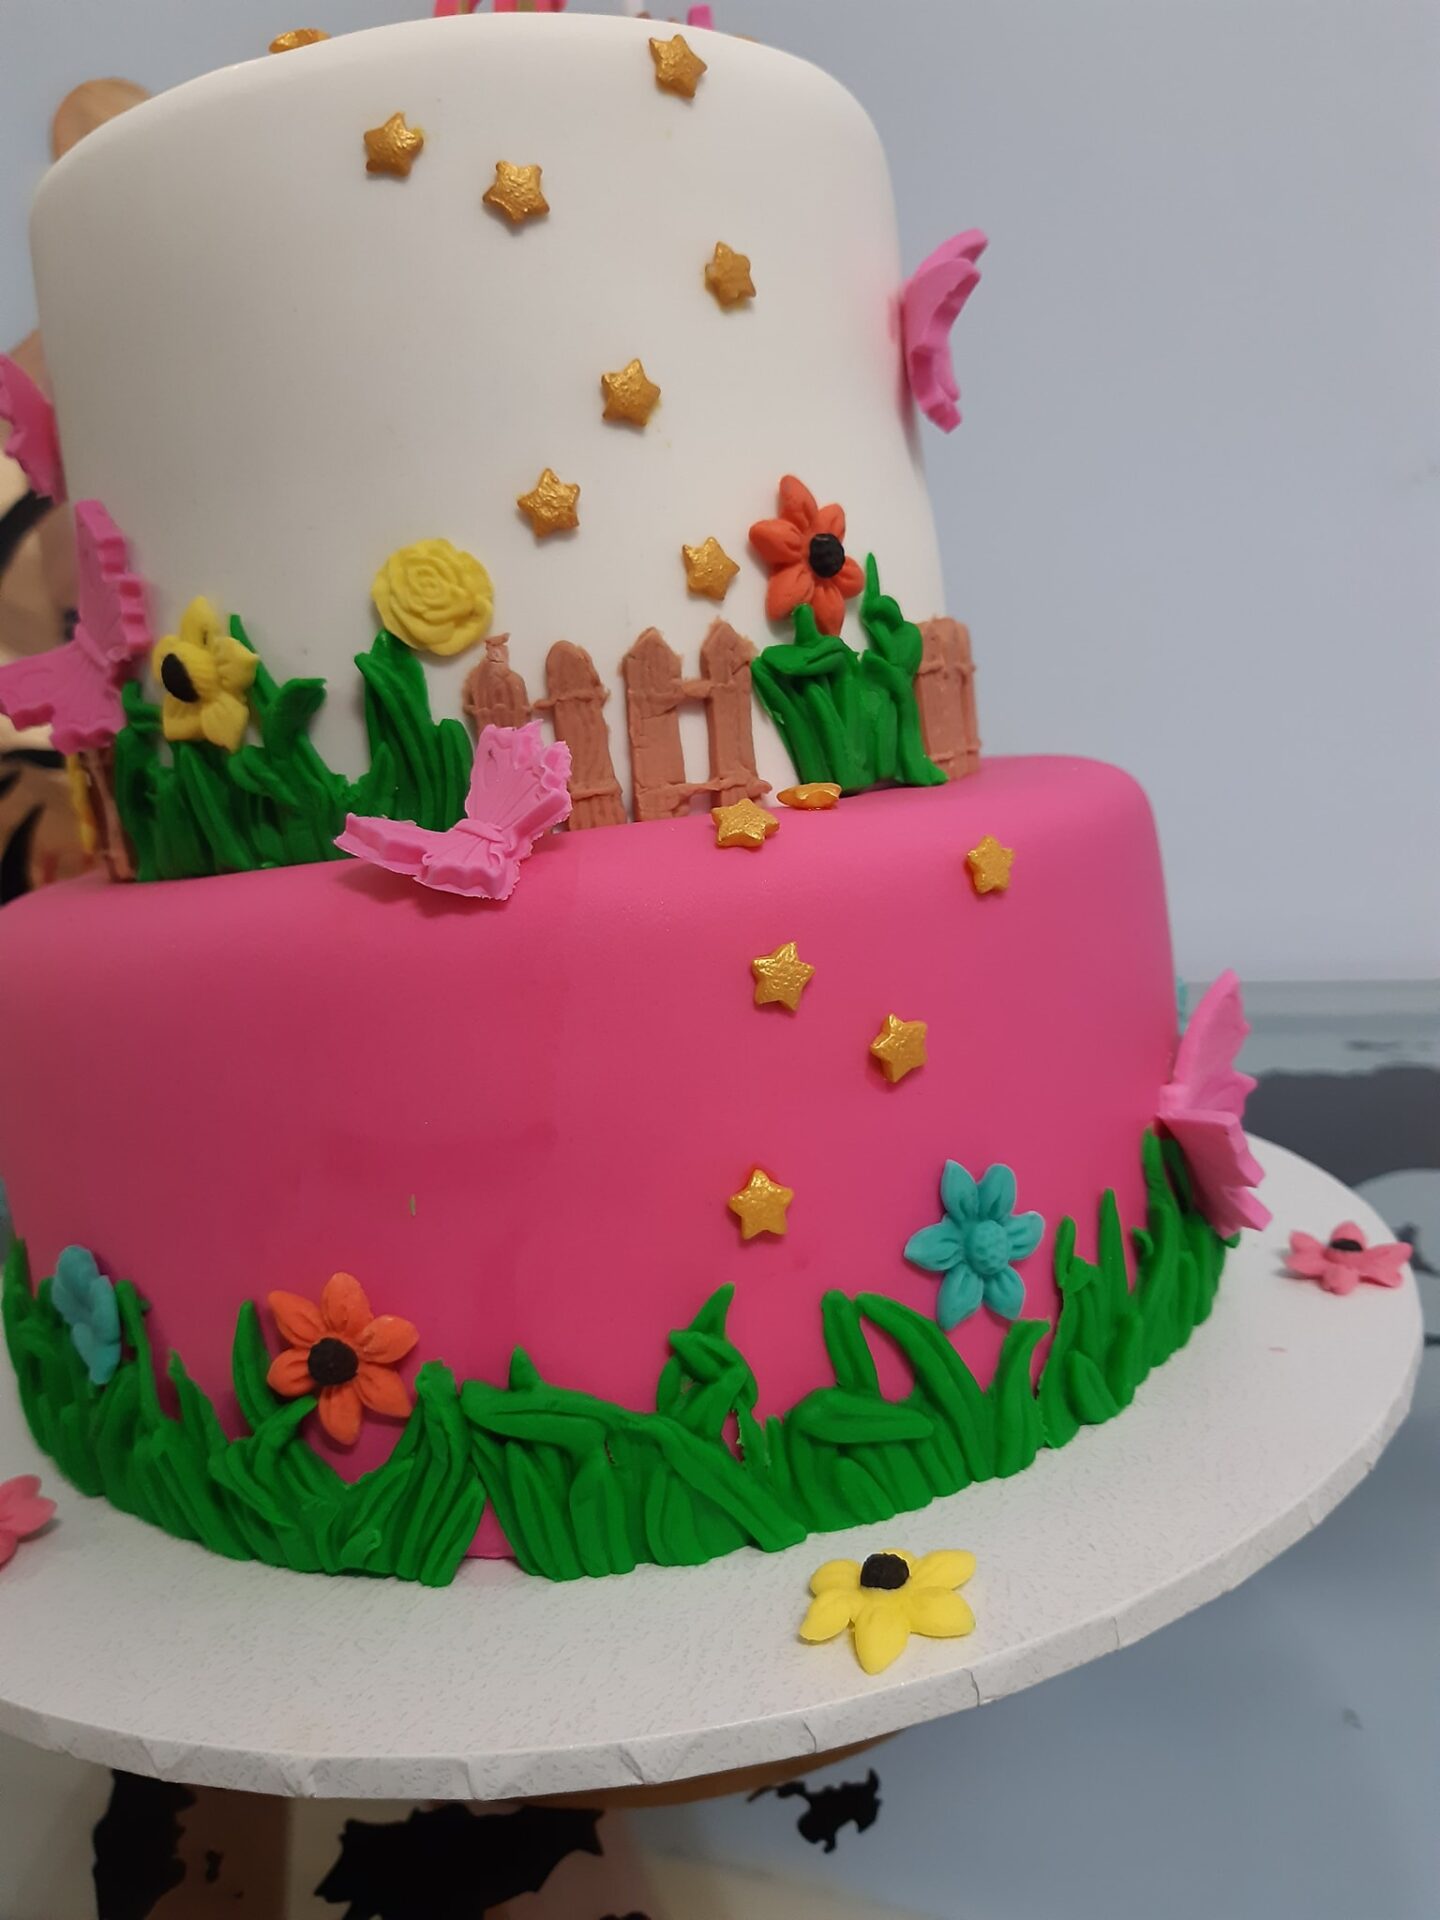 Gagianos-Cakes-Pink-Cake-1440x1920.jpg